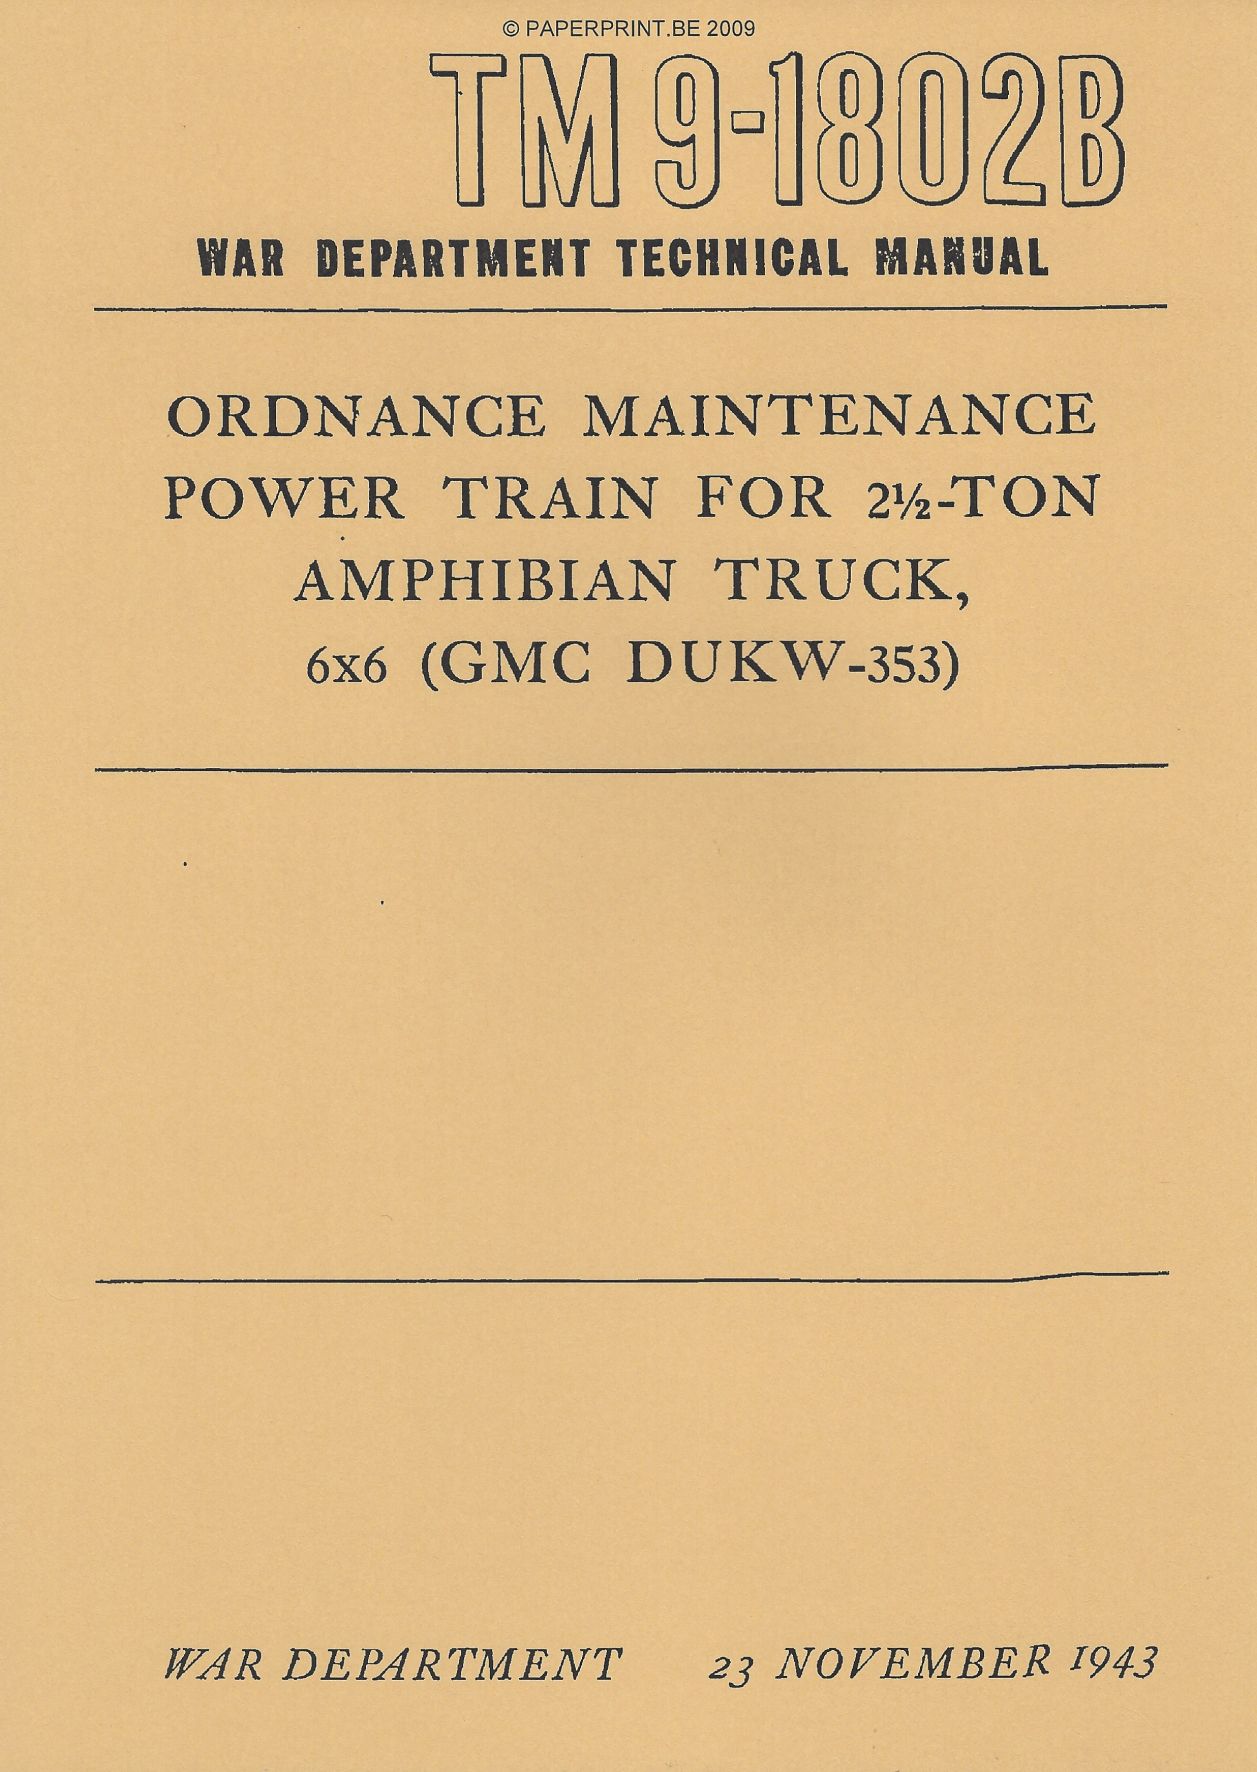 TM 9-1802B US POWER TRAIN FOR 2 ½ - TON AMPHIBIAN TRUCK, 6x6, (GMC DUKW-353)